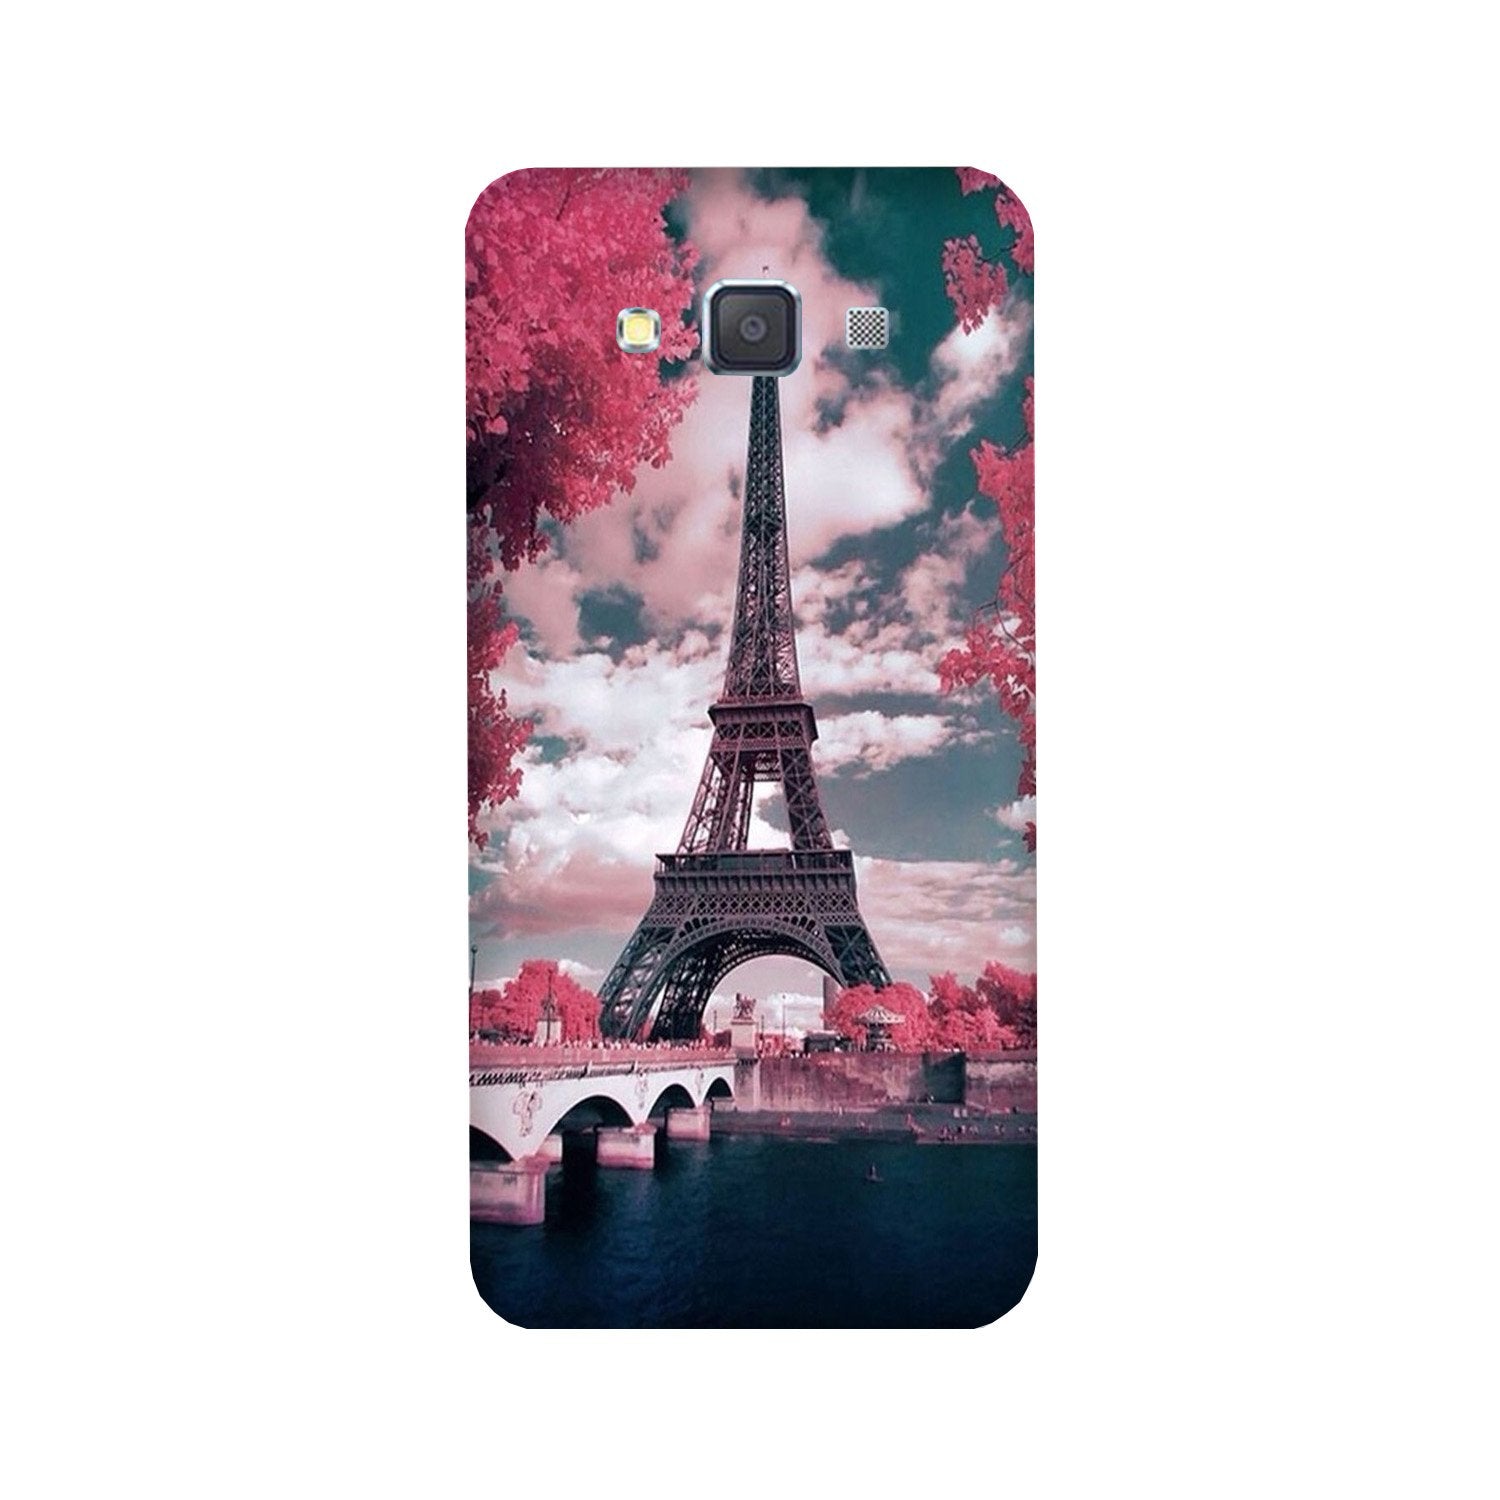 Eiffel Tower Case for Galaxy E7(Design - 101)